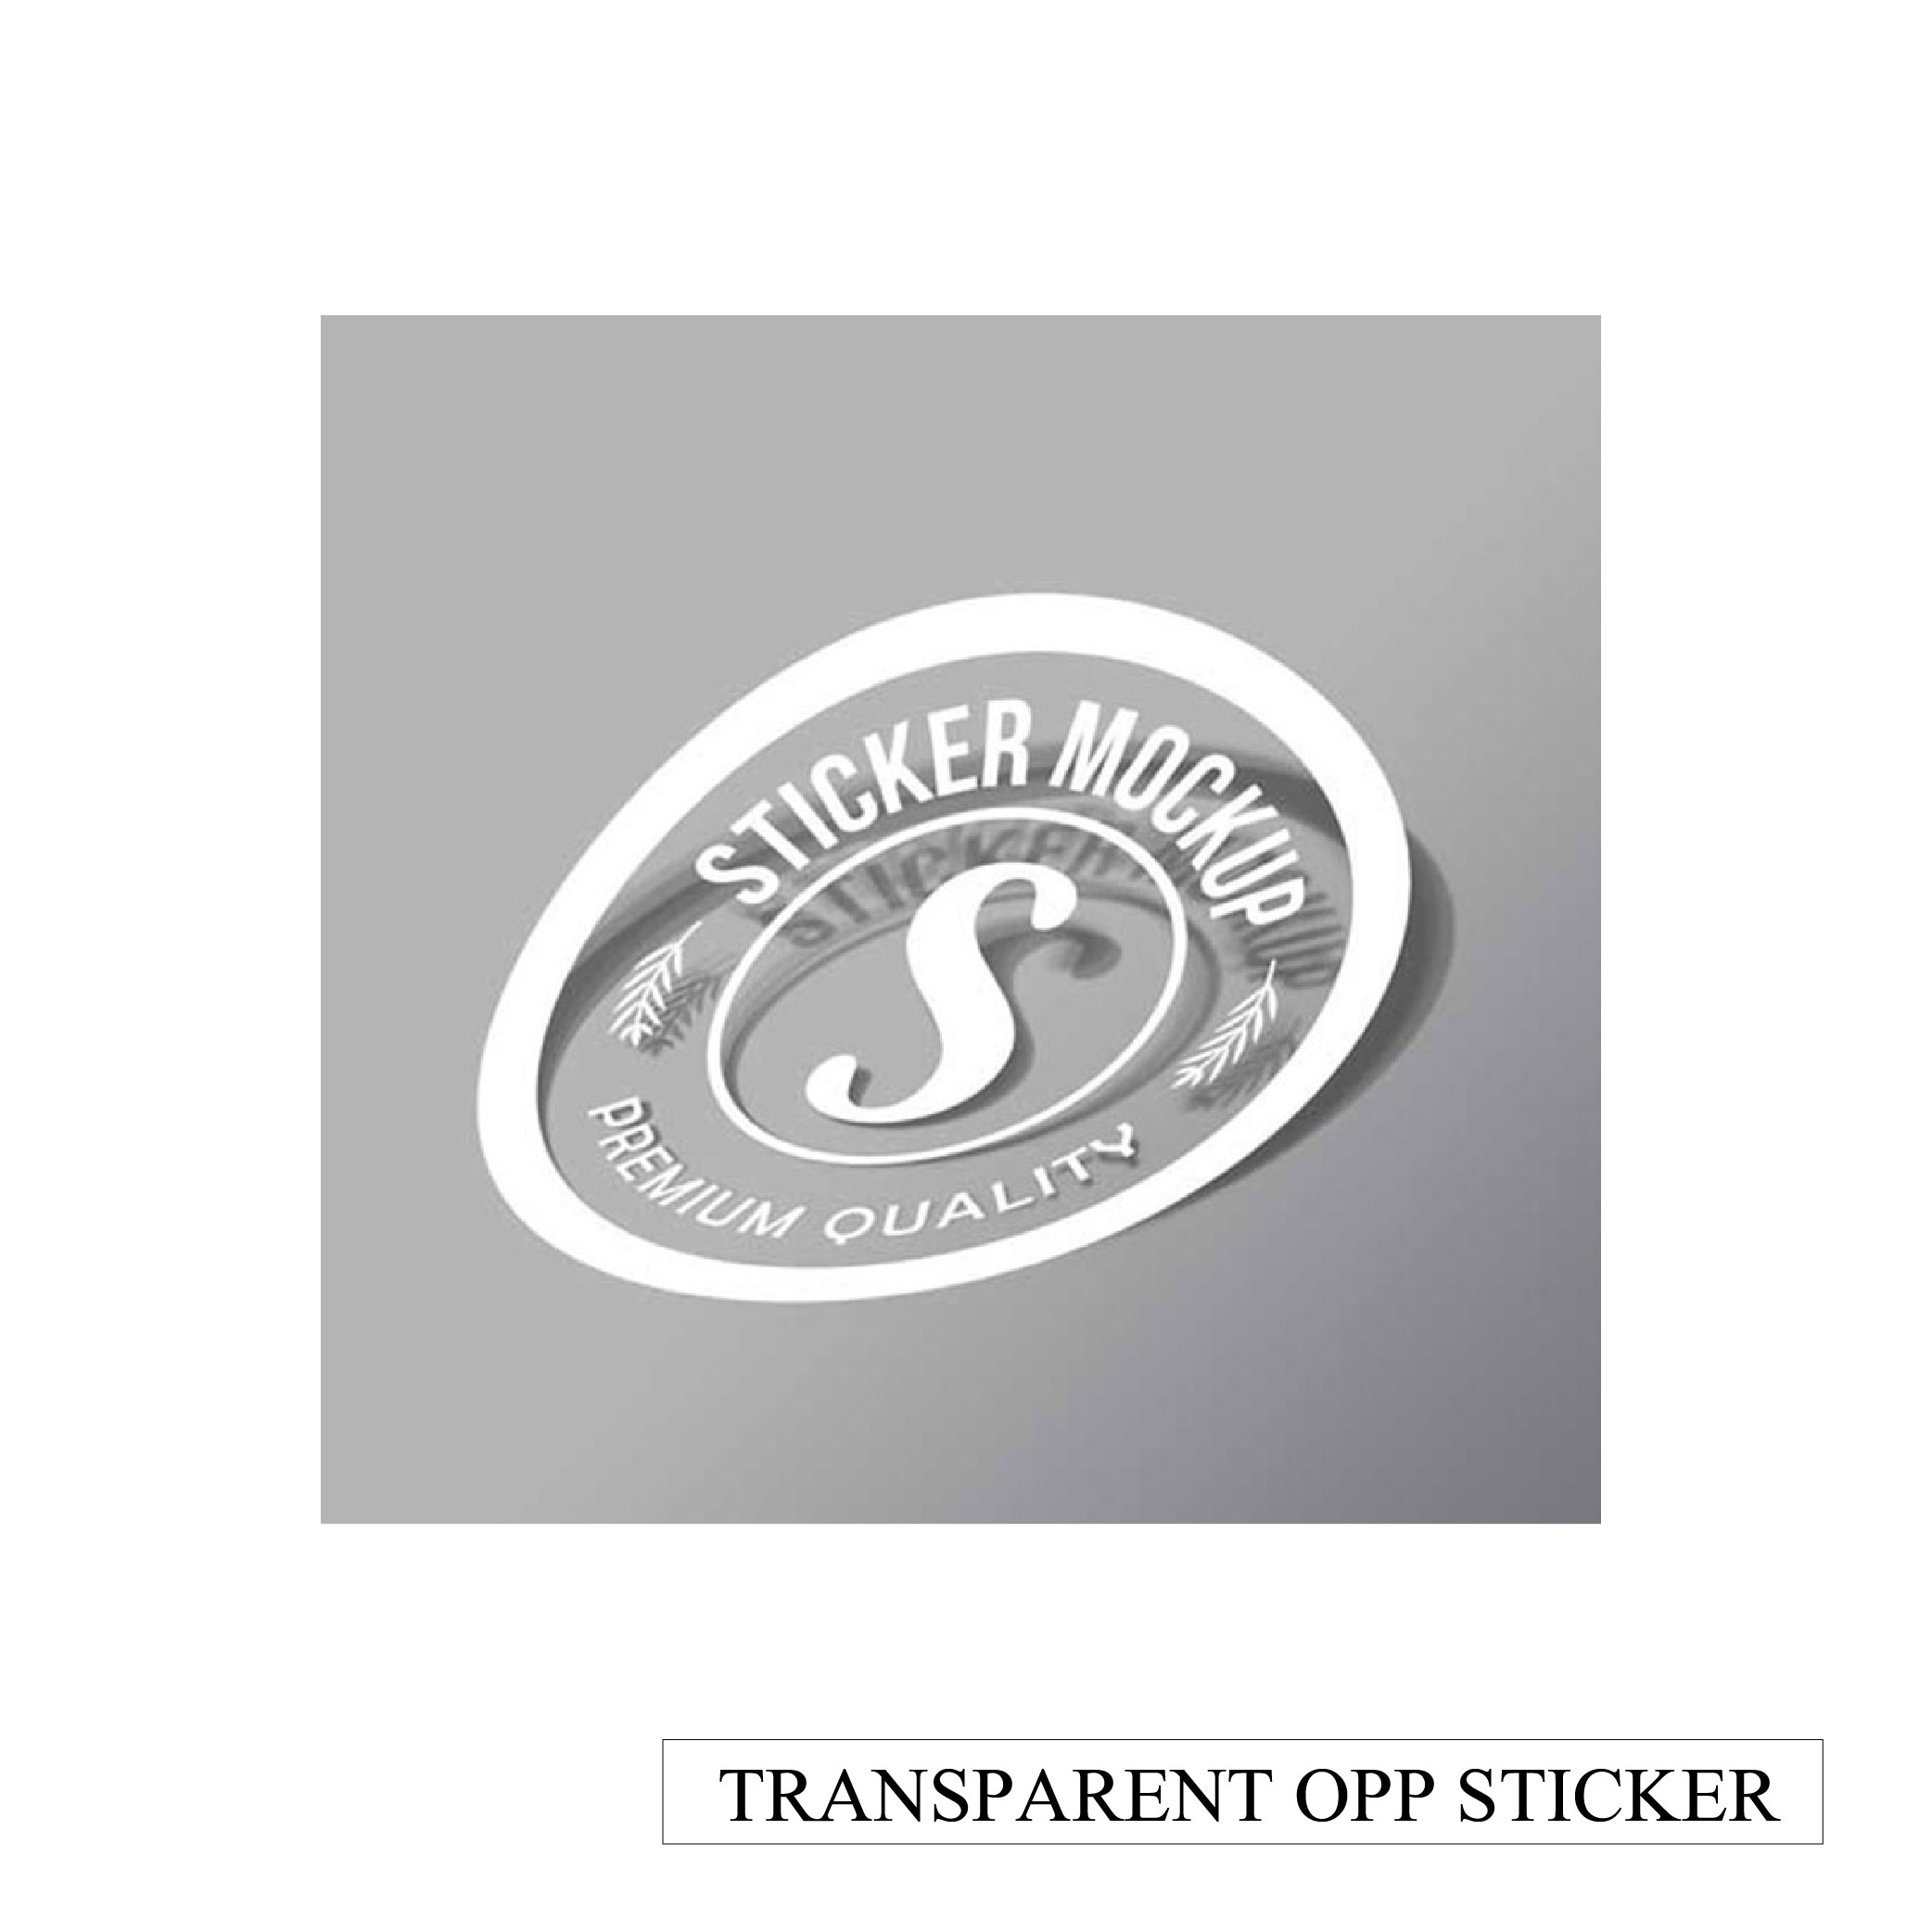 Transparent Opp Sticker